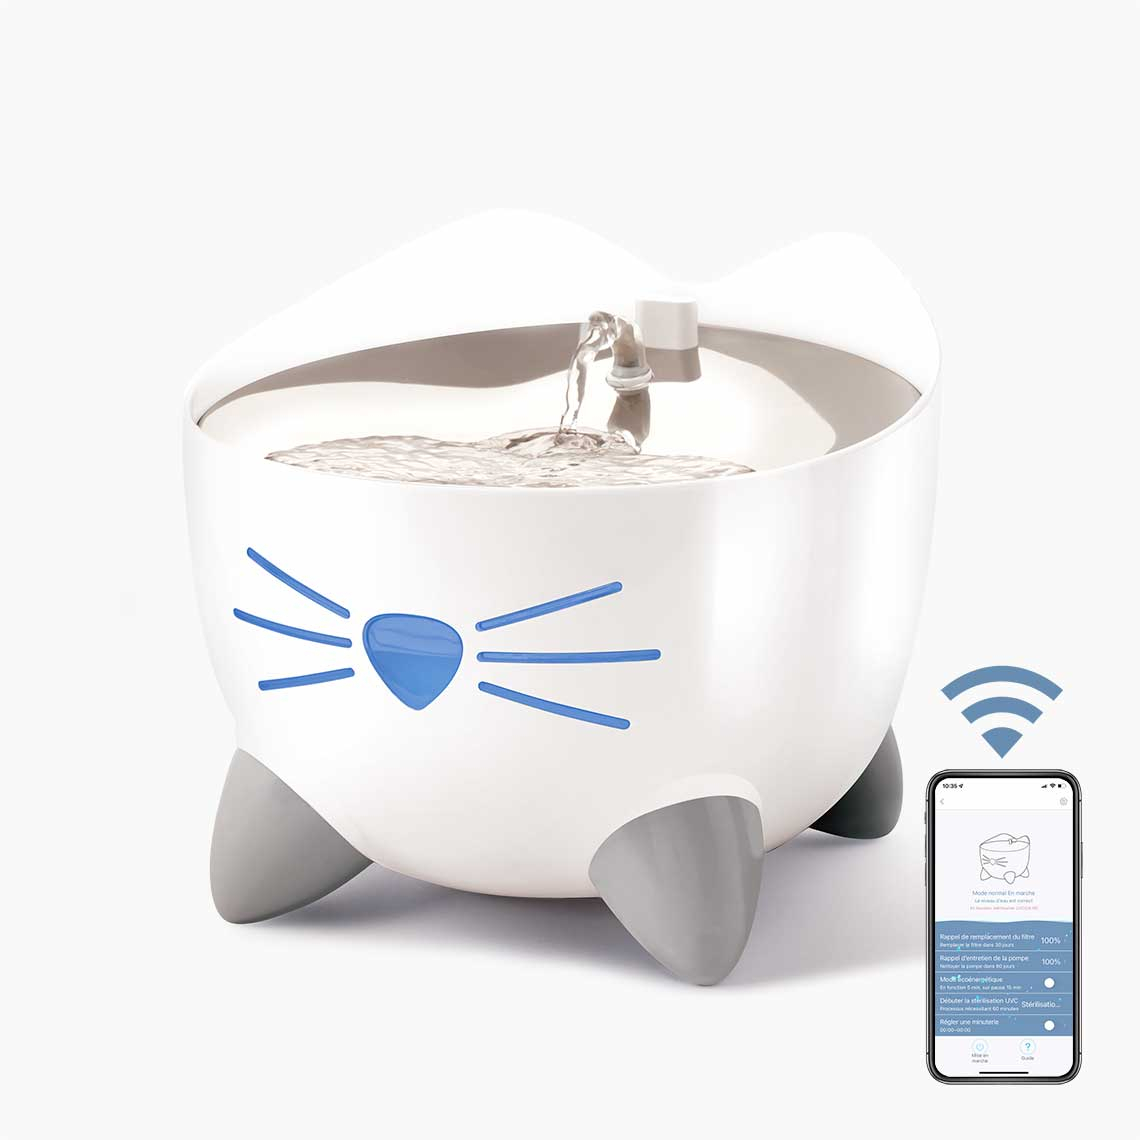 Catit Pixi Smart wifi Bianco e acciaio - 2L - Fontana d'acqua per gatti